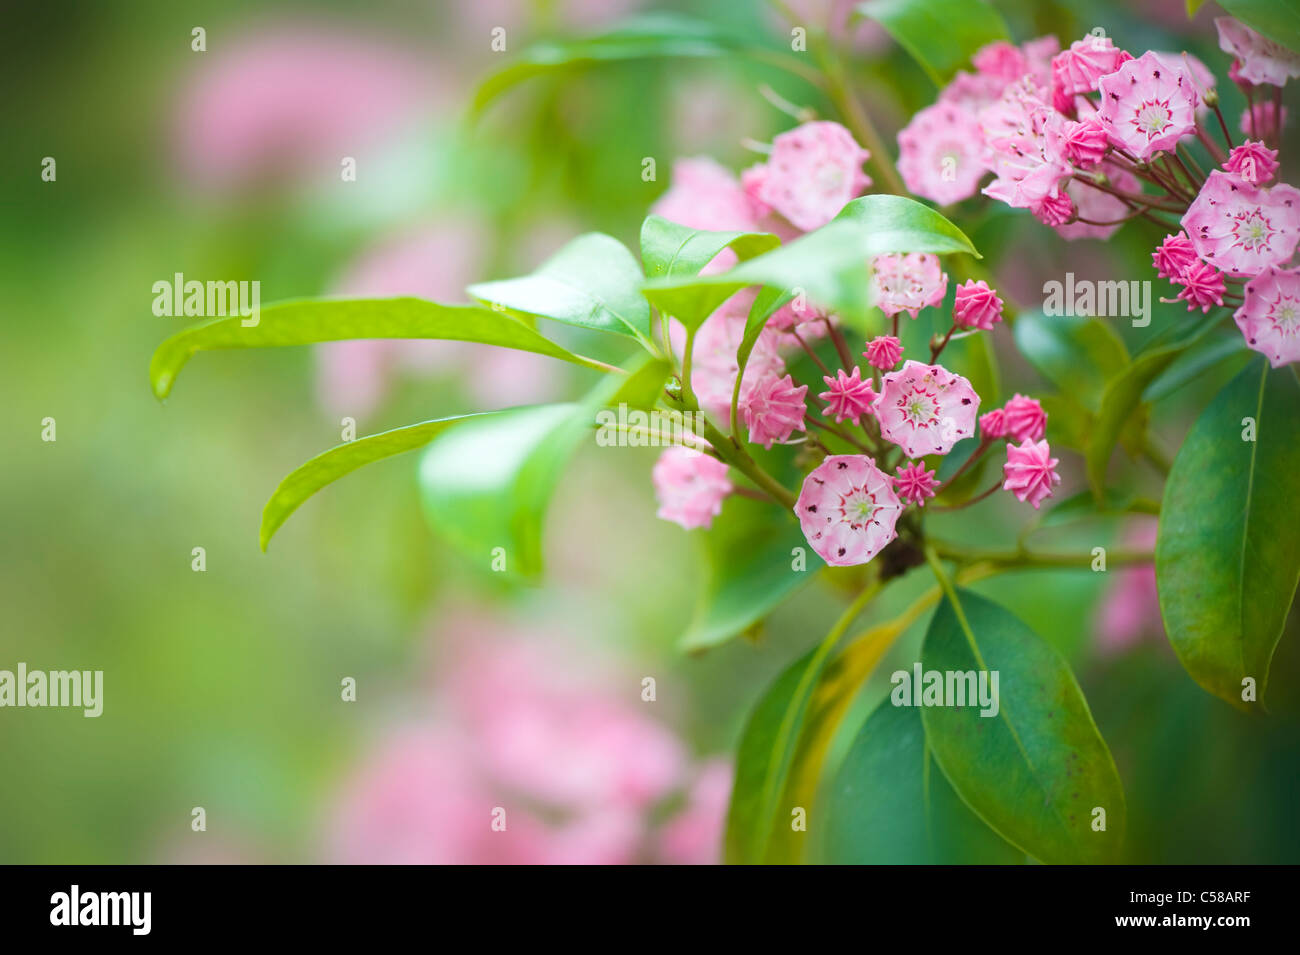 Kalmia latifolia, commonly called Mountain-laurel or Spoonwood shown here in flower. Stock Photo